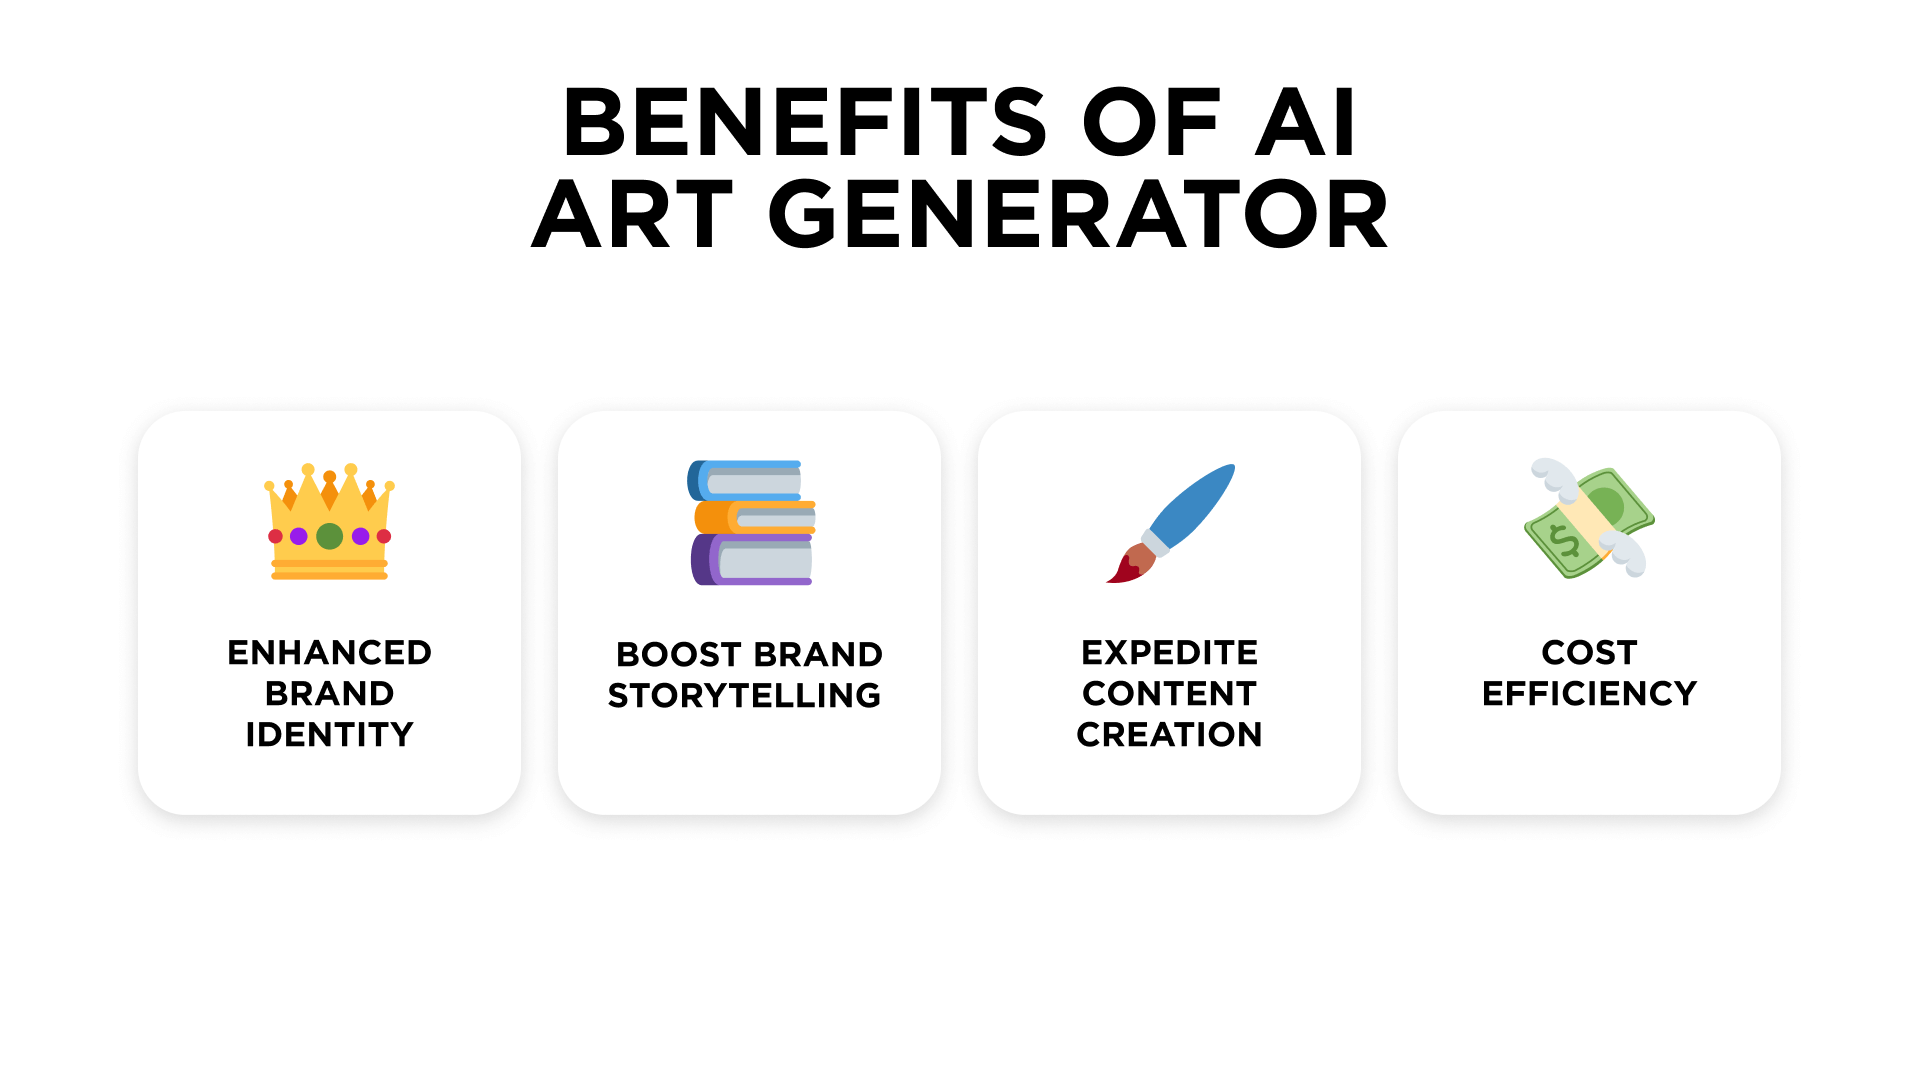 Benefits of using AI art generators